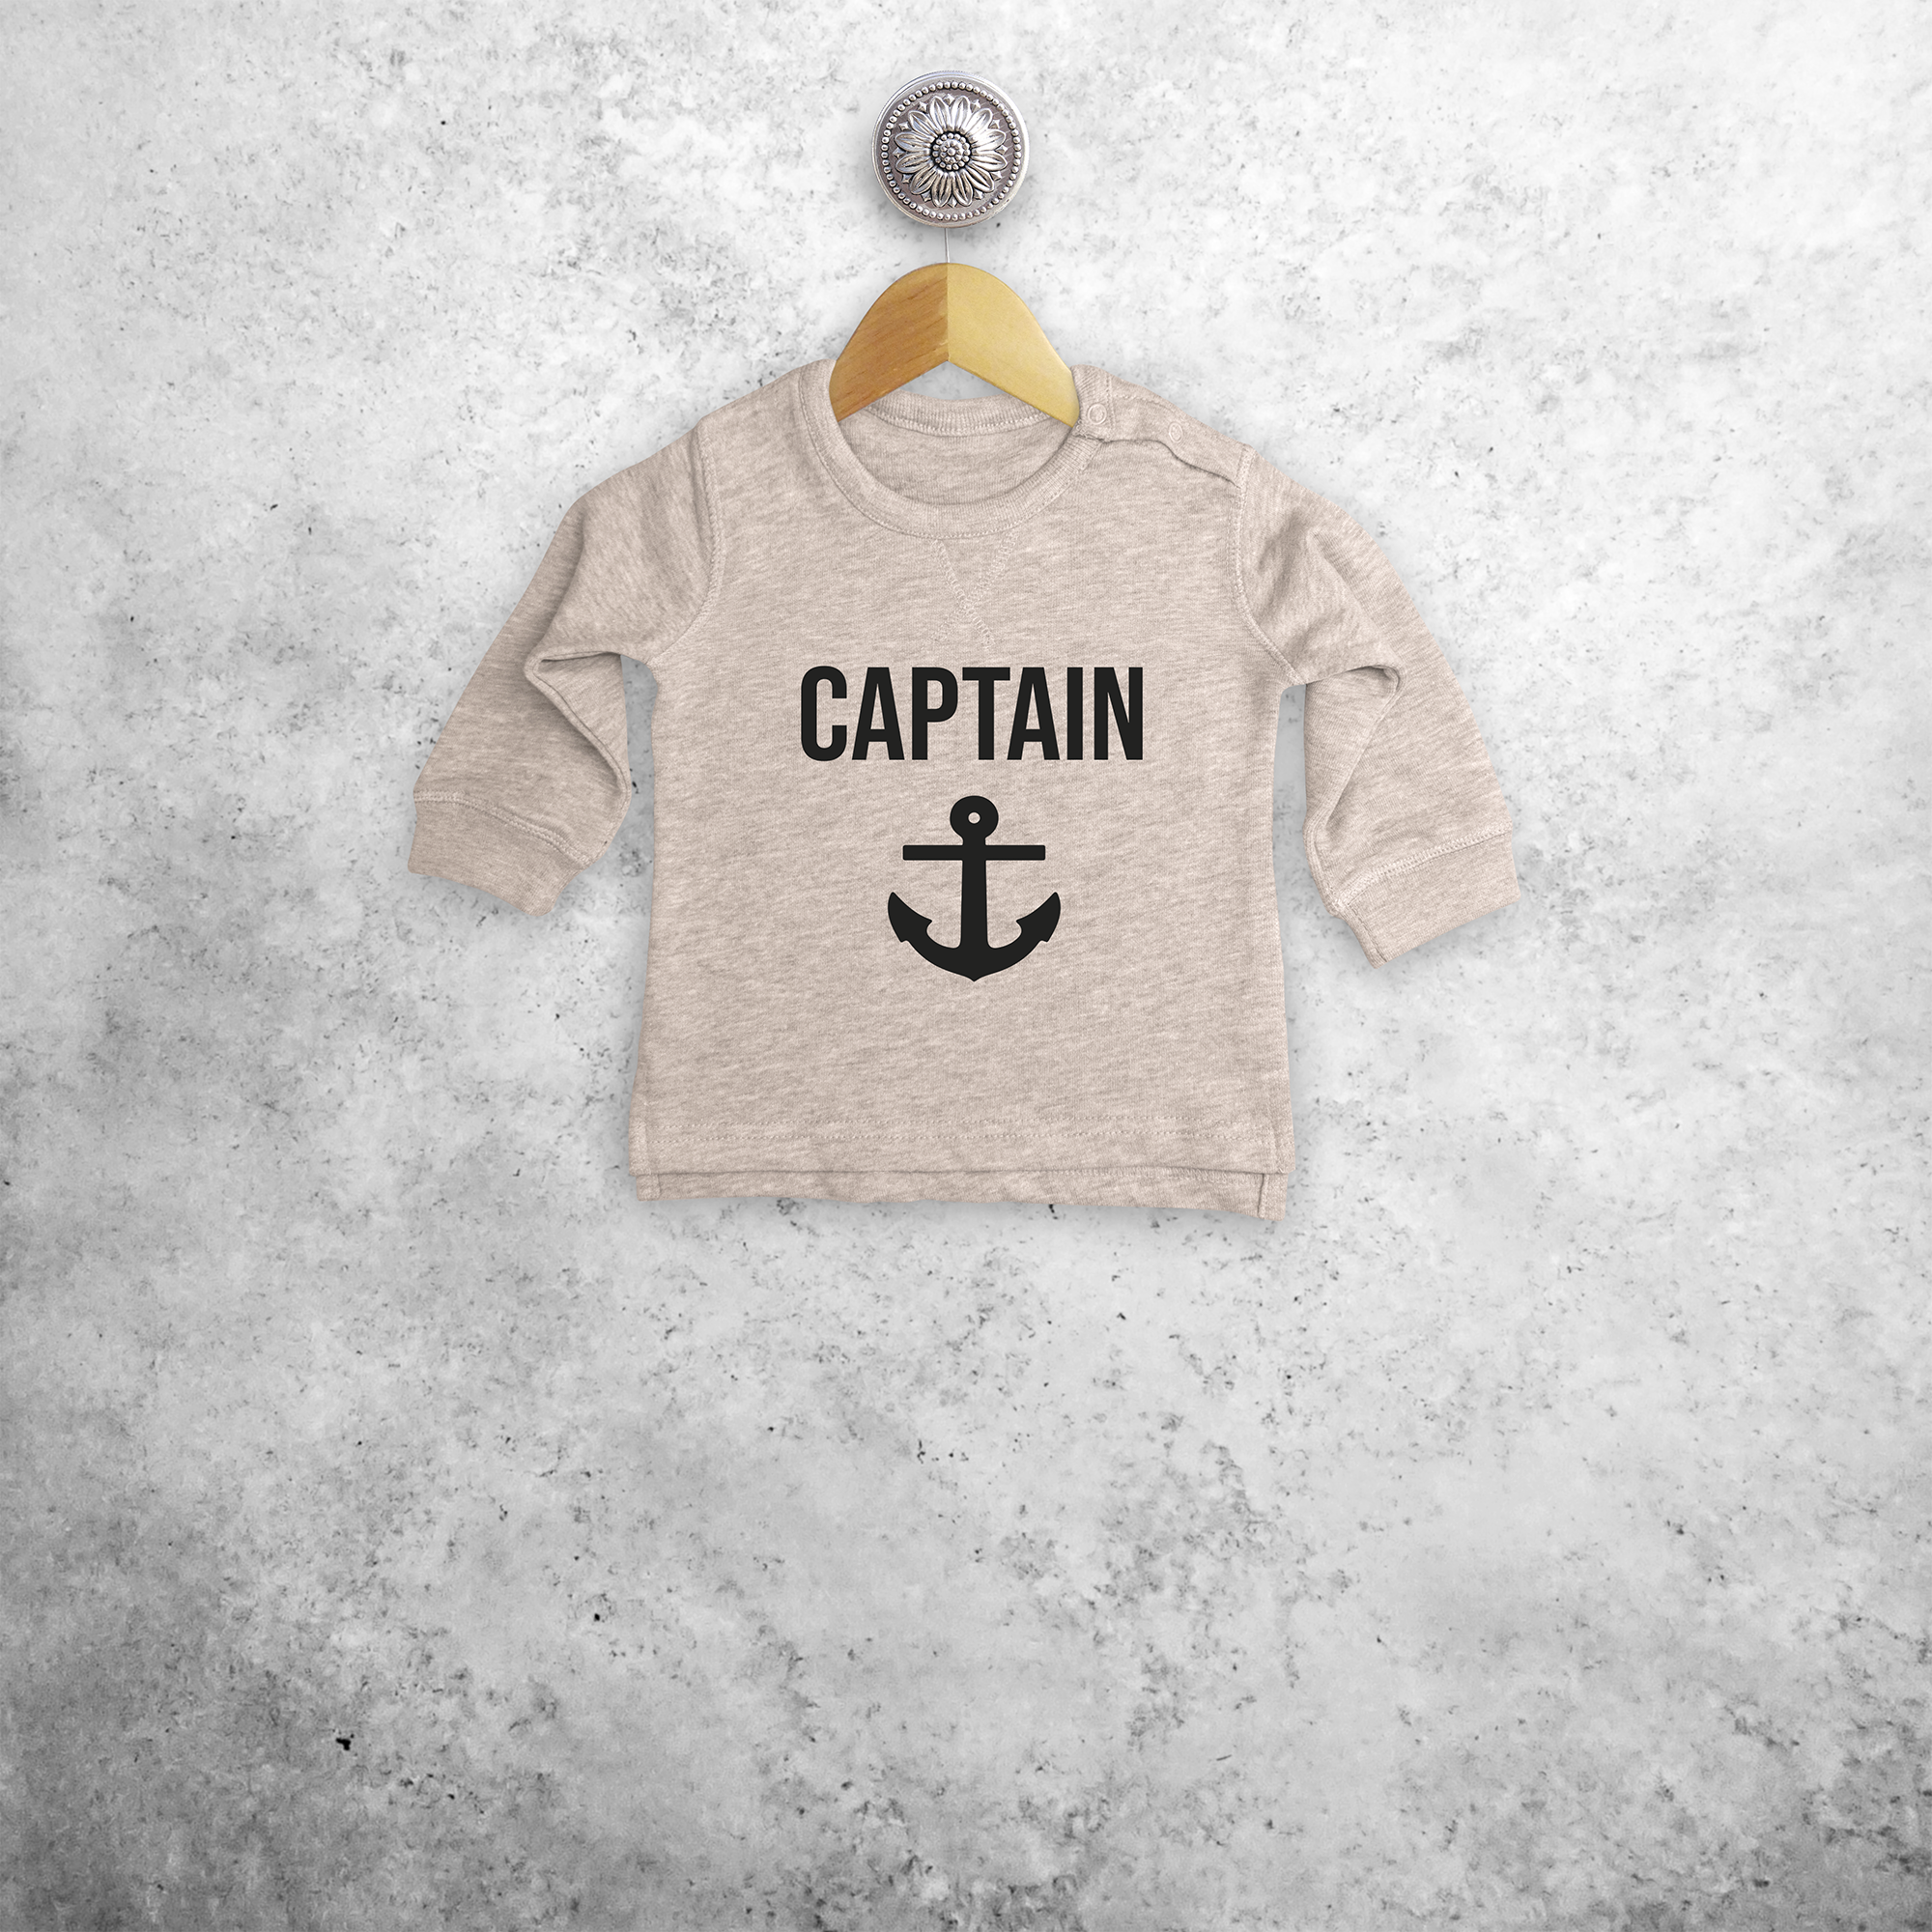 'Captain' baby sweater